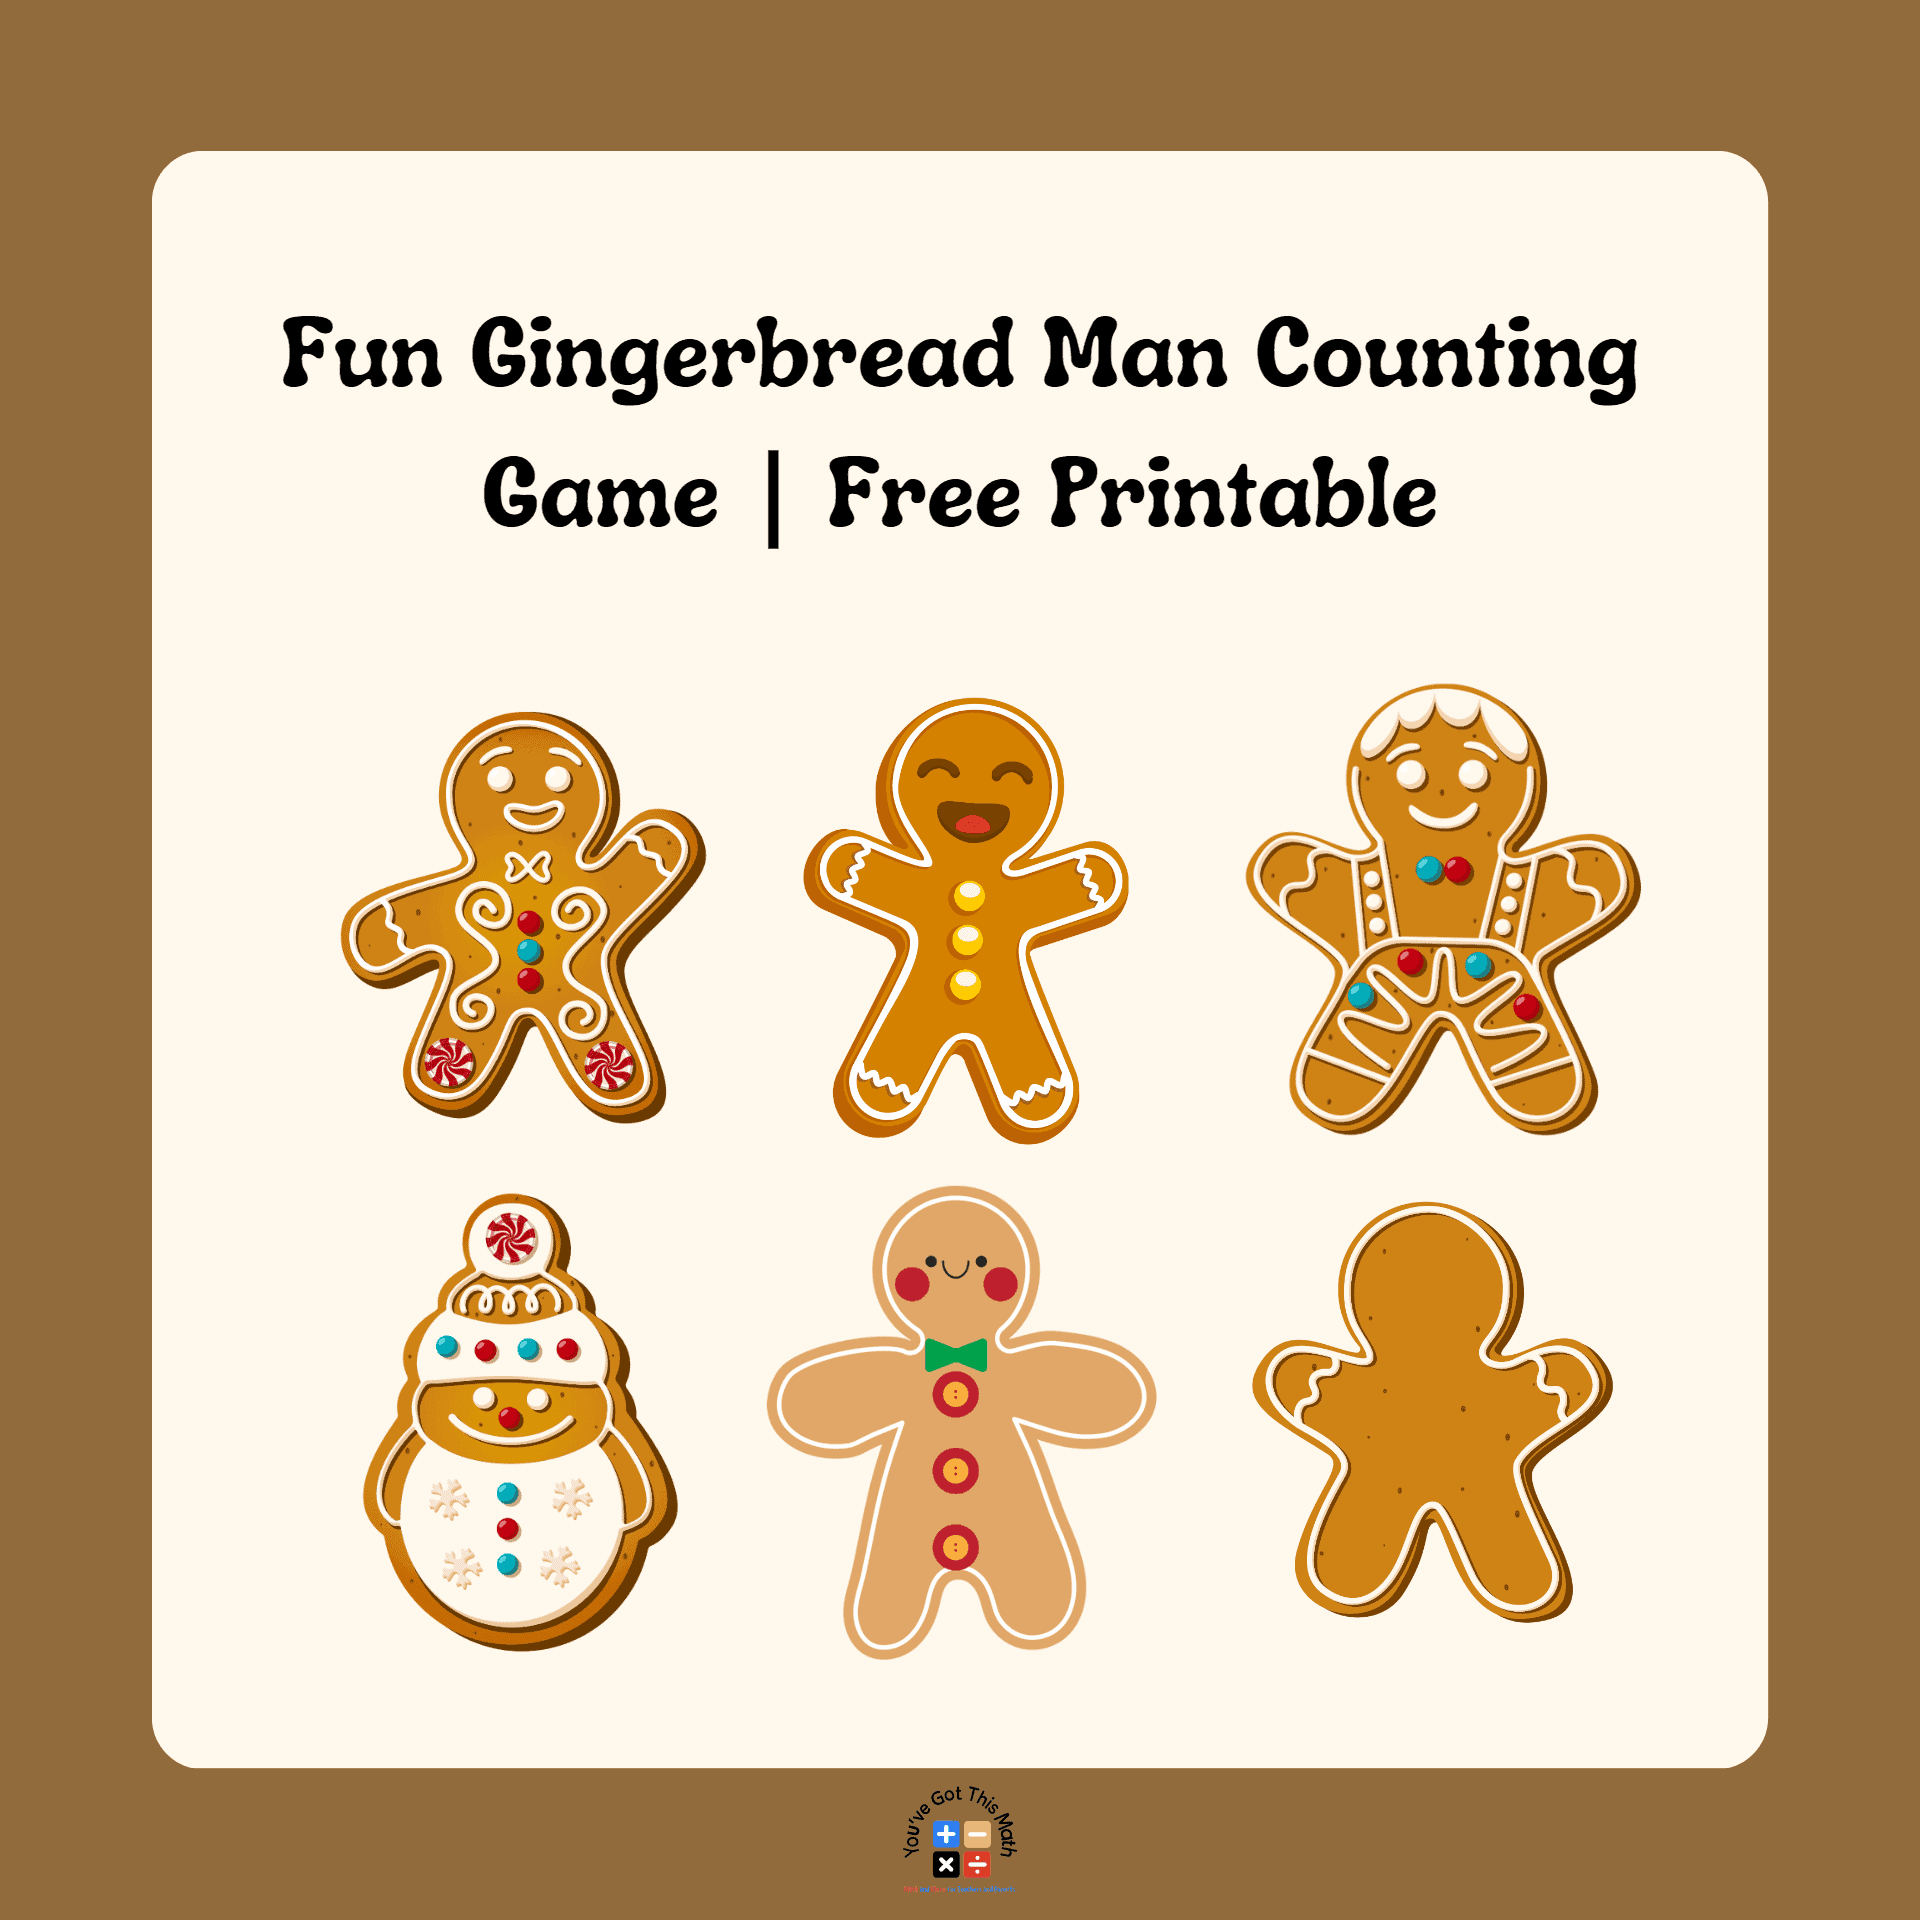 Fun Gingerbread Man Counting Game | Free Printable